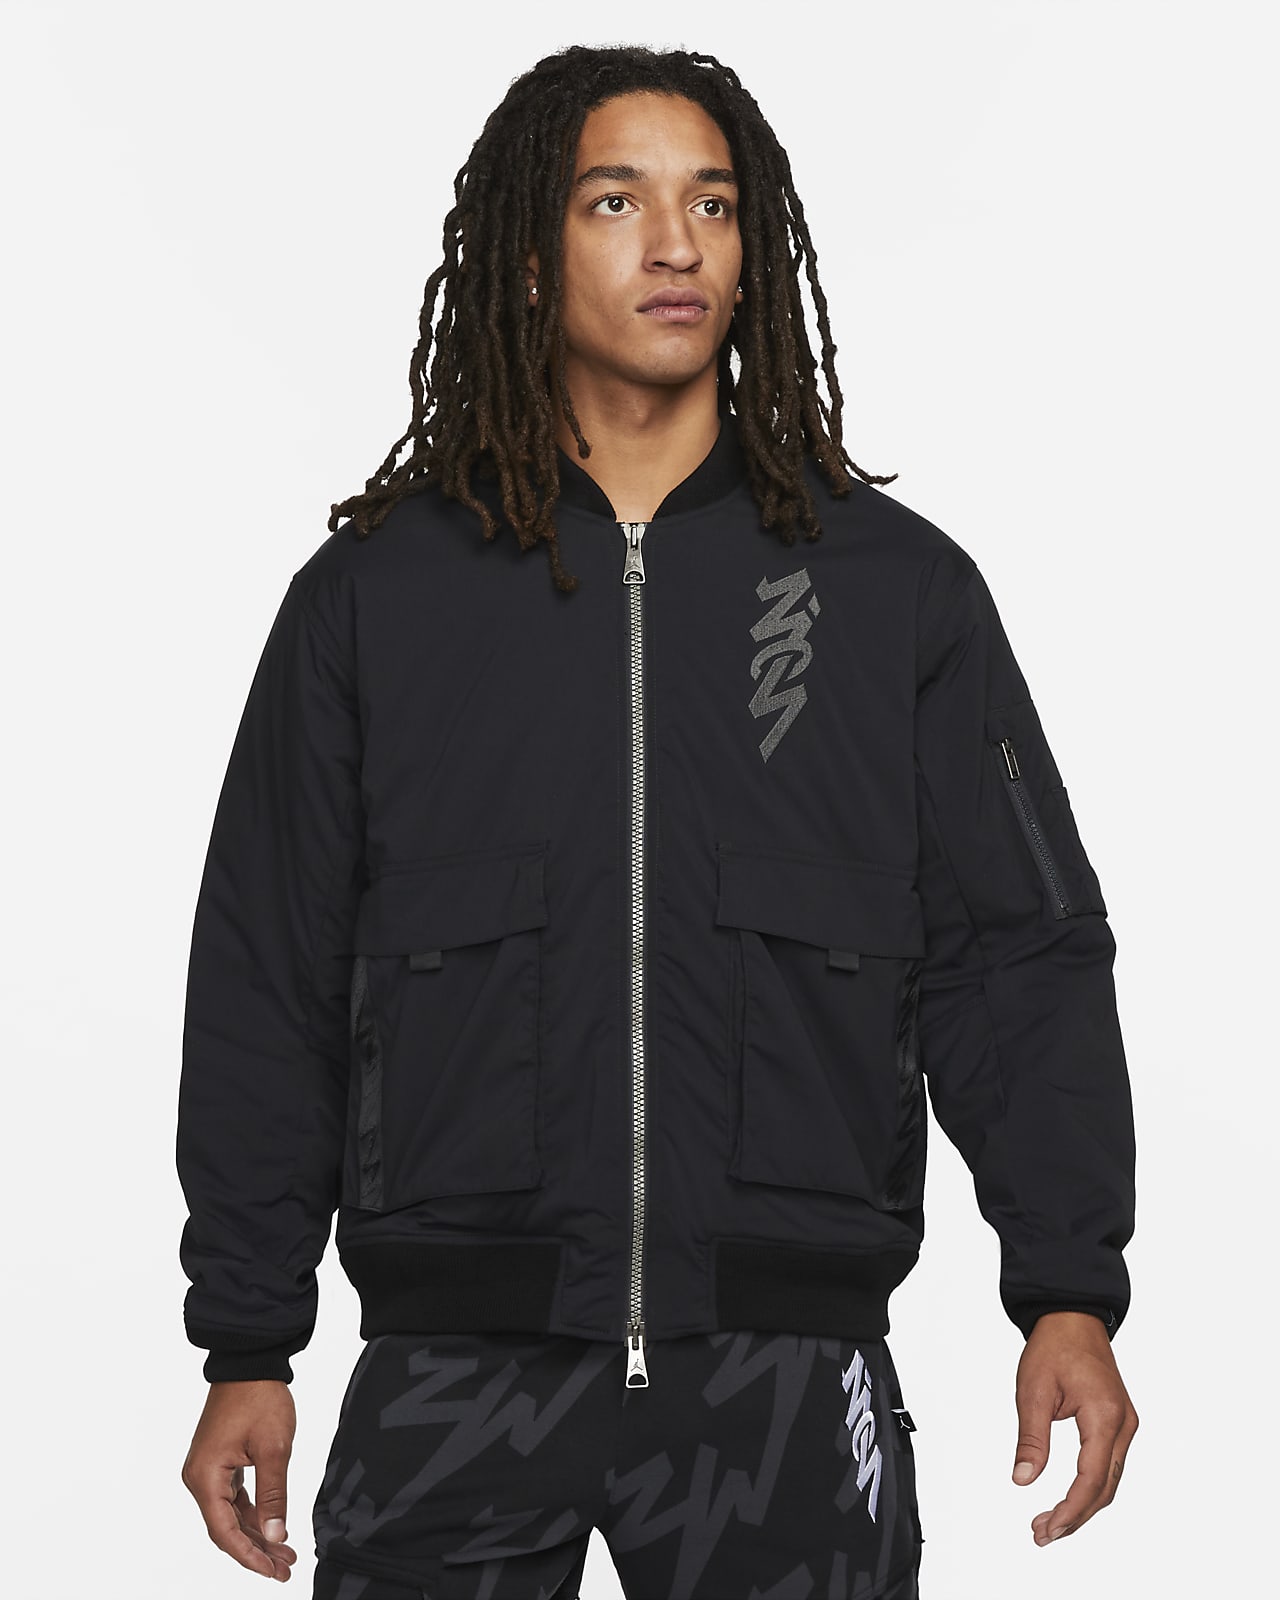 Nike Air Jordan Flight jacket grey full zip size XL - munimoro.gob.pe